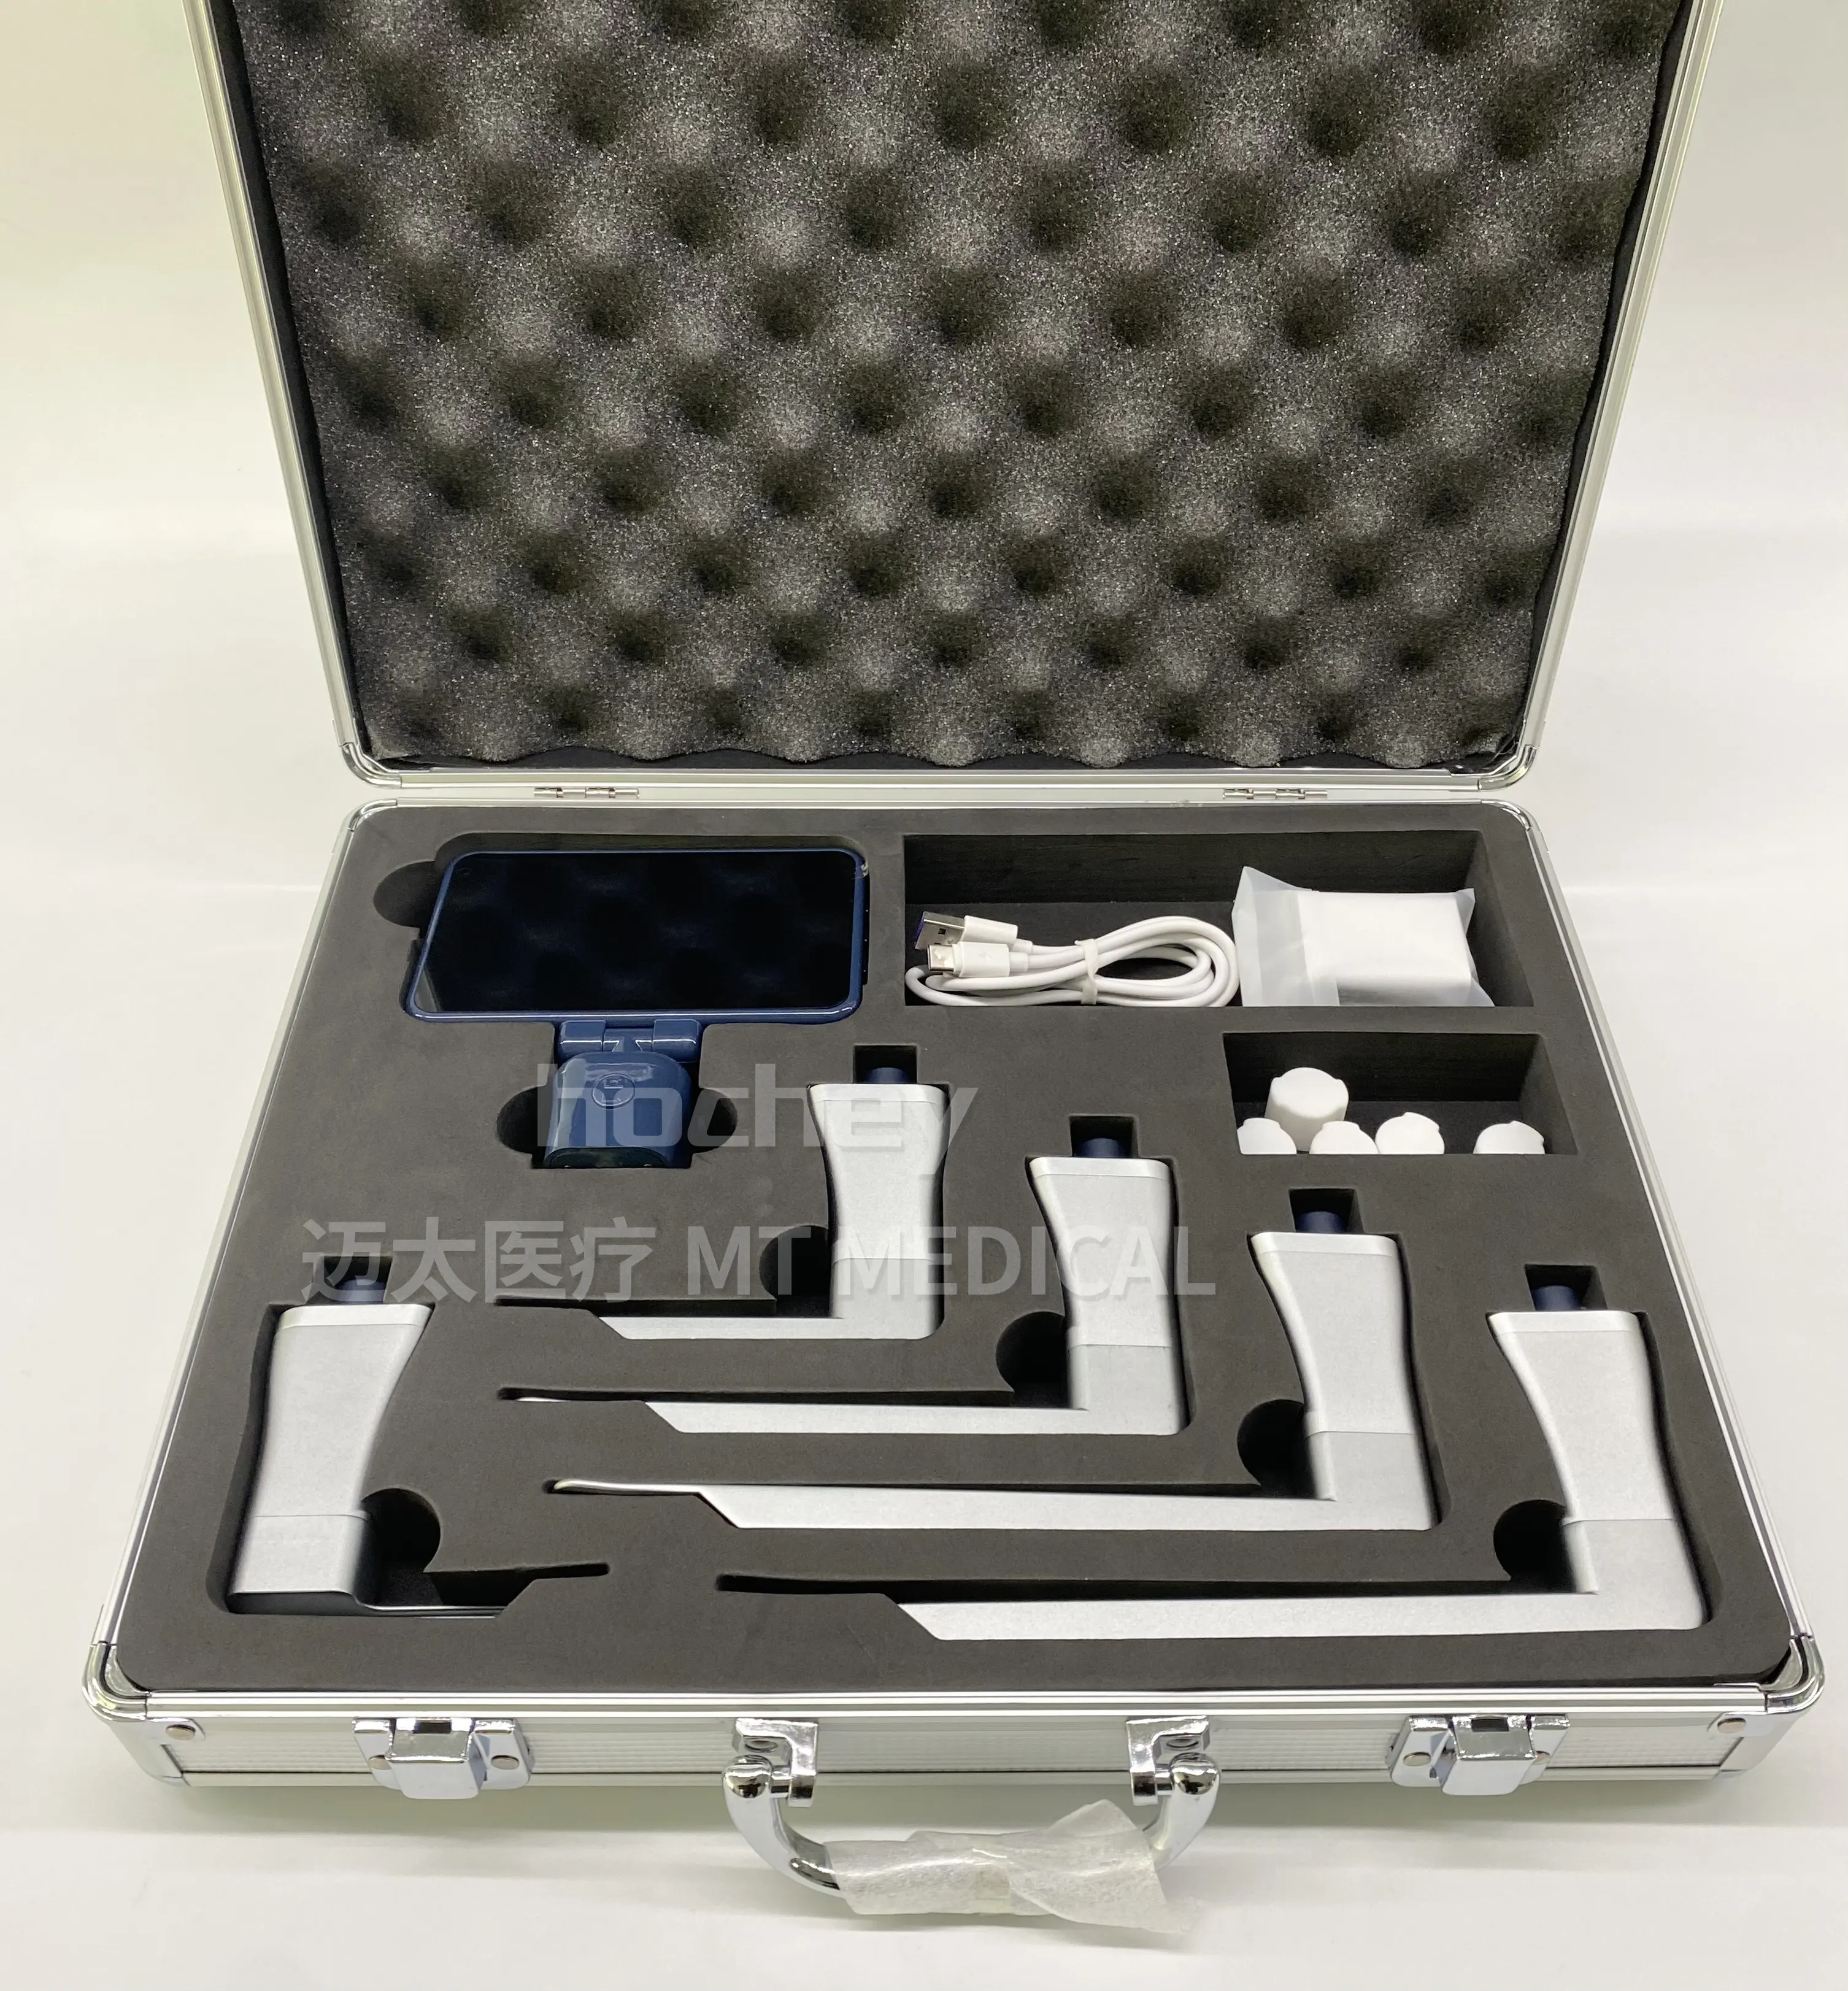 MT Portable Video Laryngoscope electronic laryngoscope with 4 inch touch screen